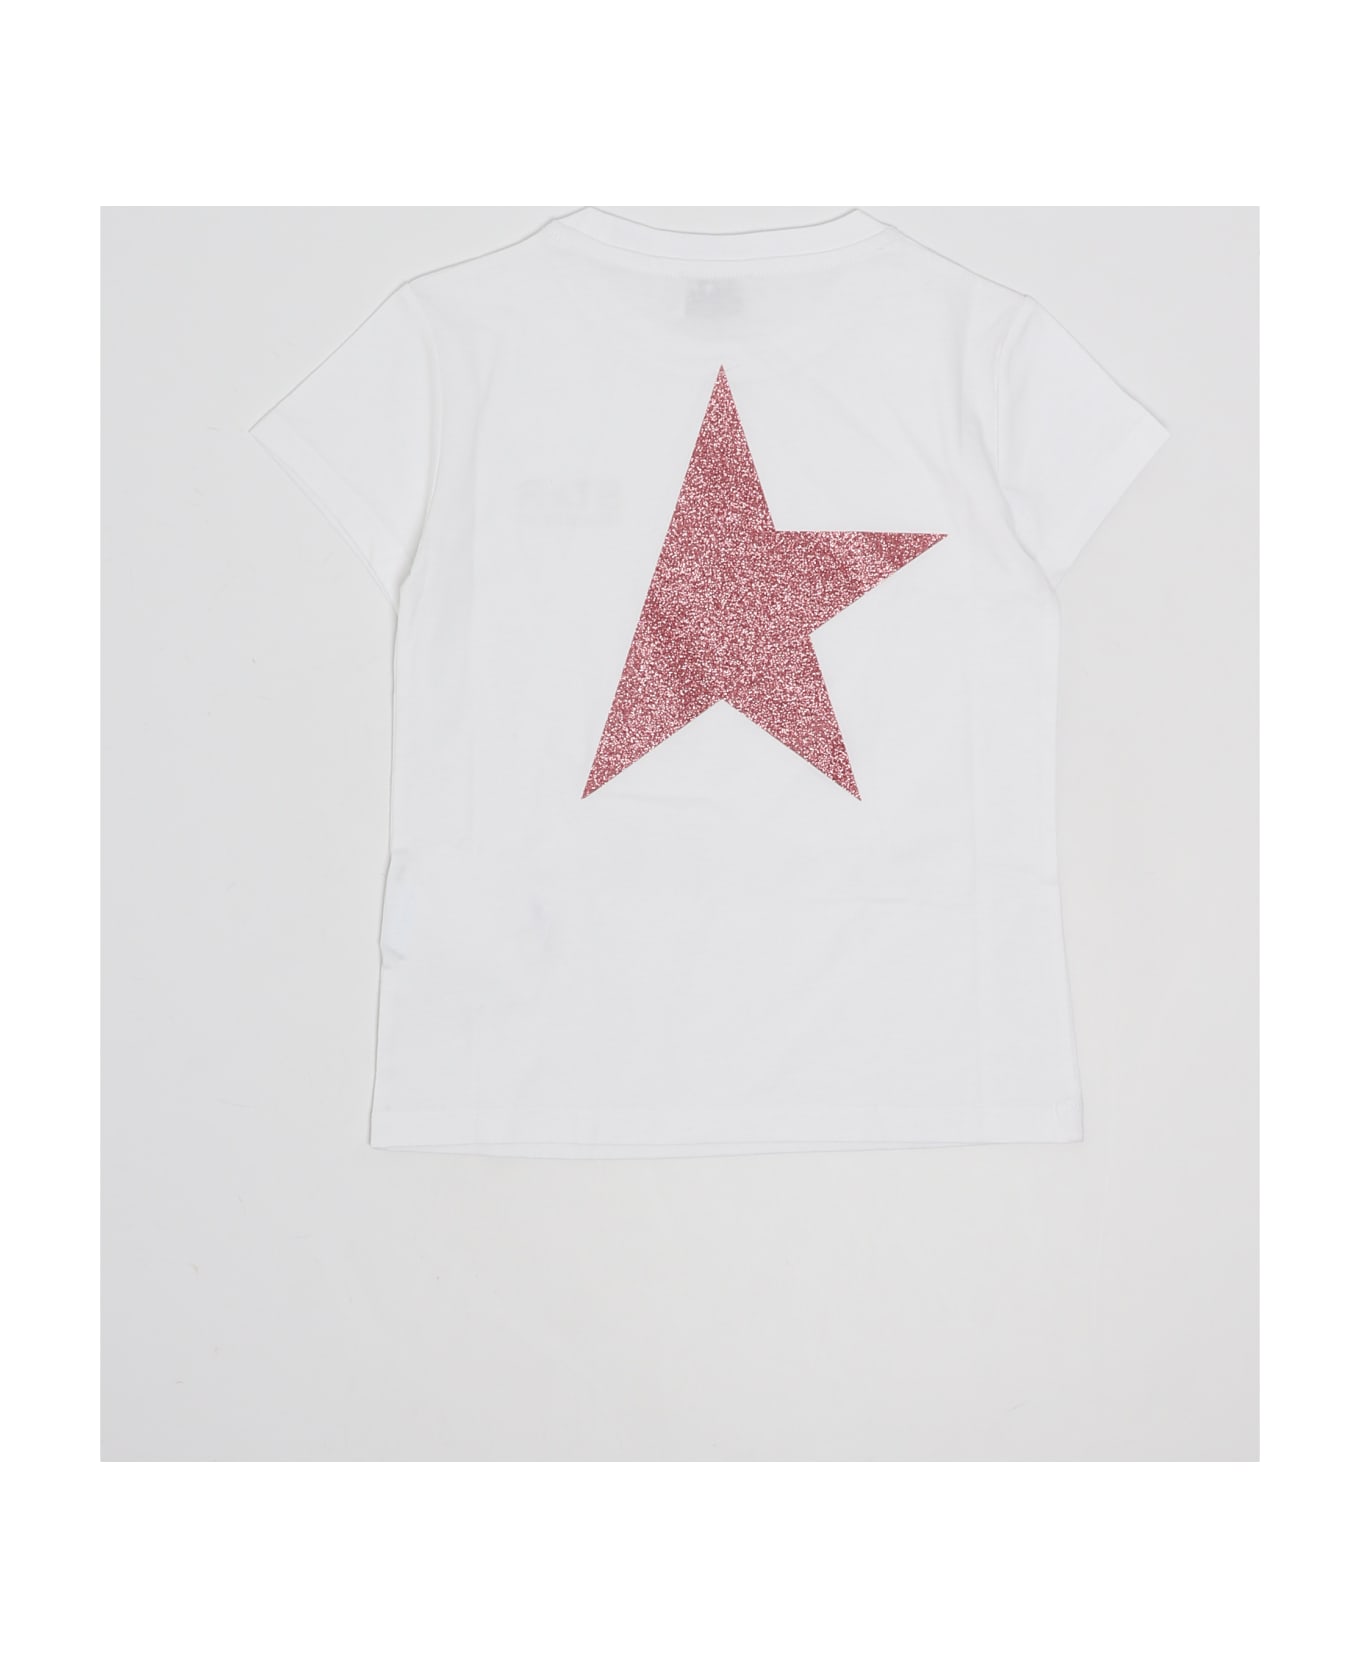 Golden Goose Big Star Printed T-shirt - BIANCO-ROSA 